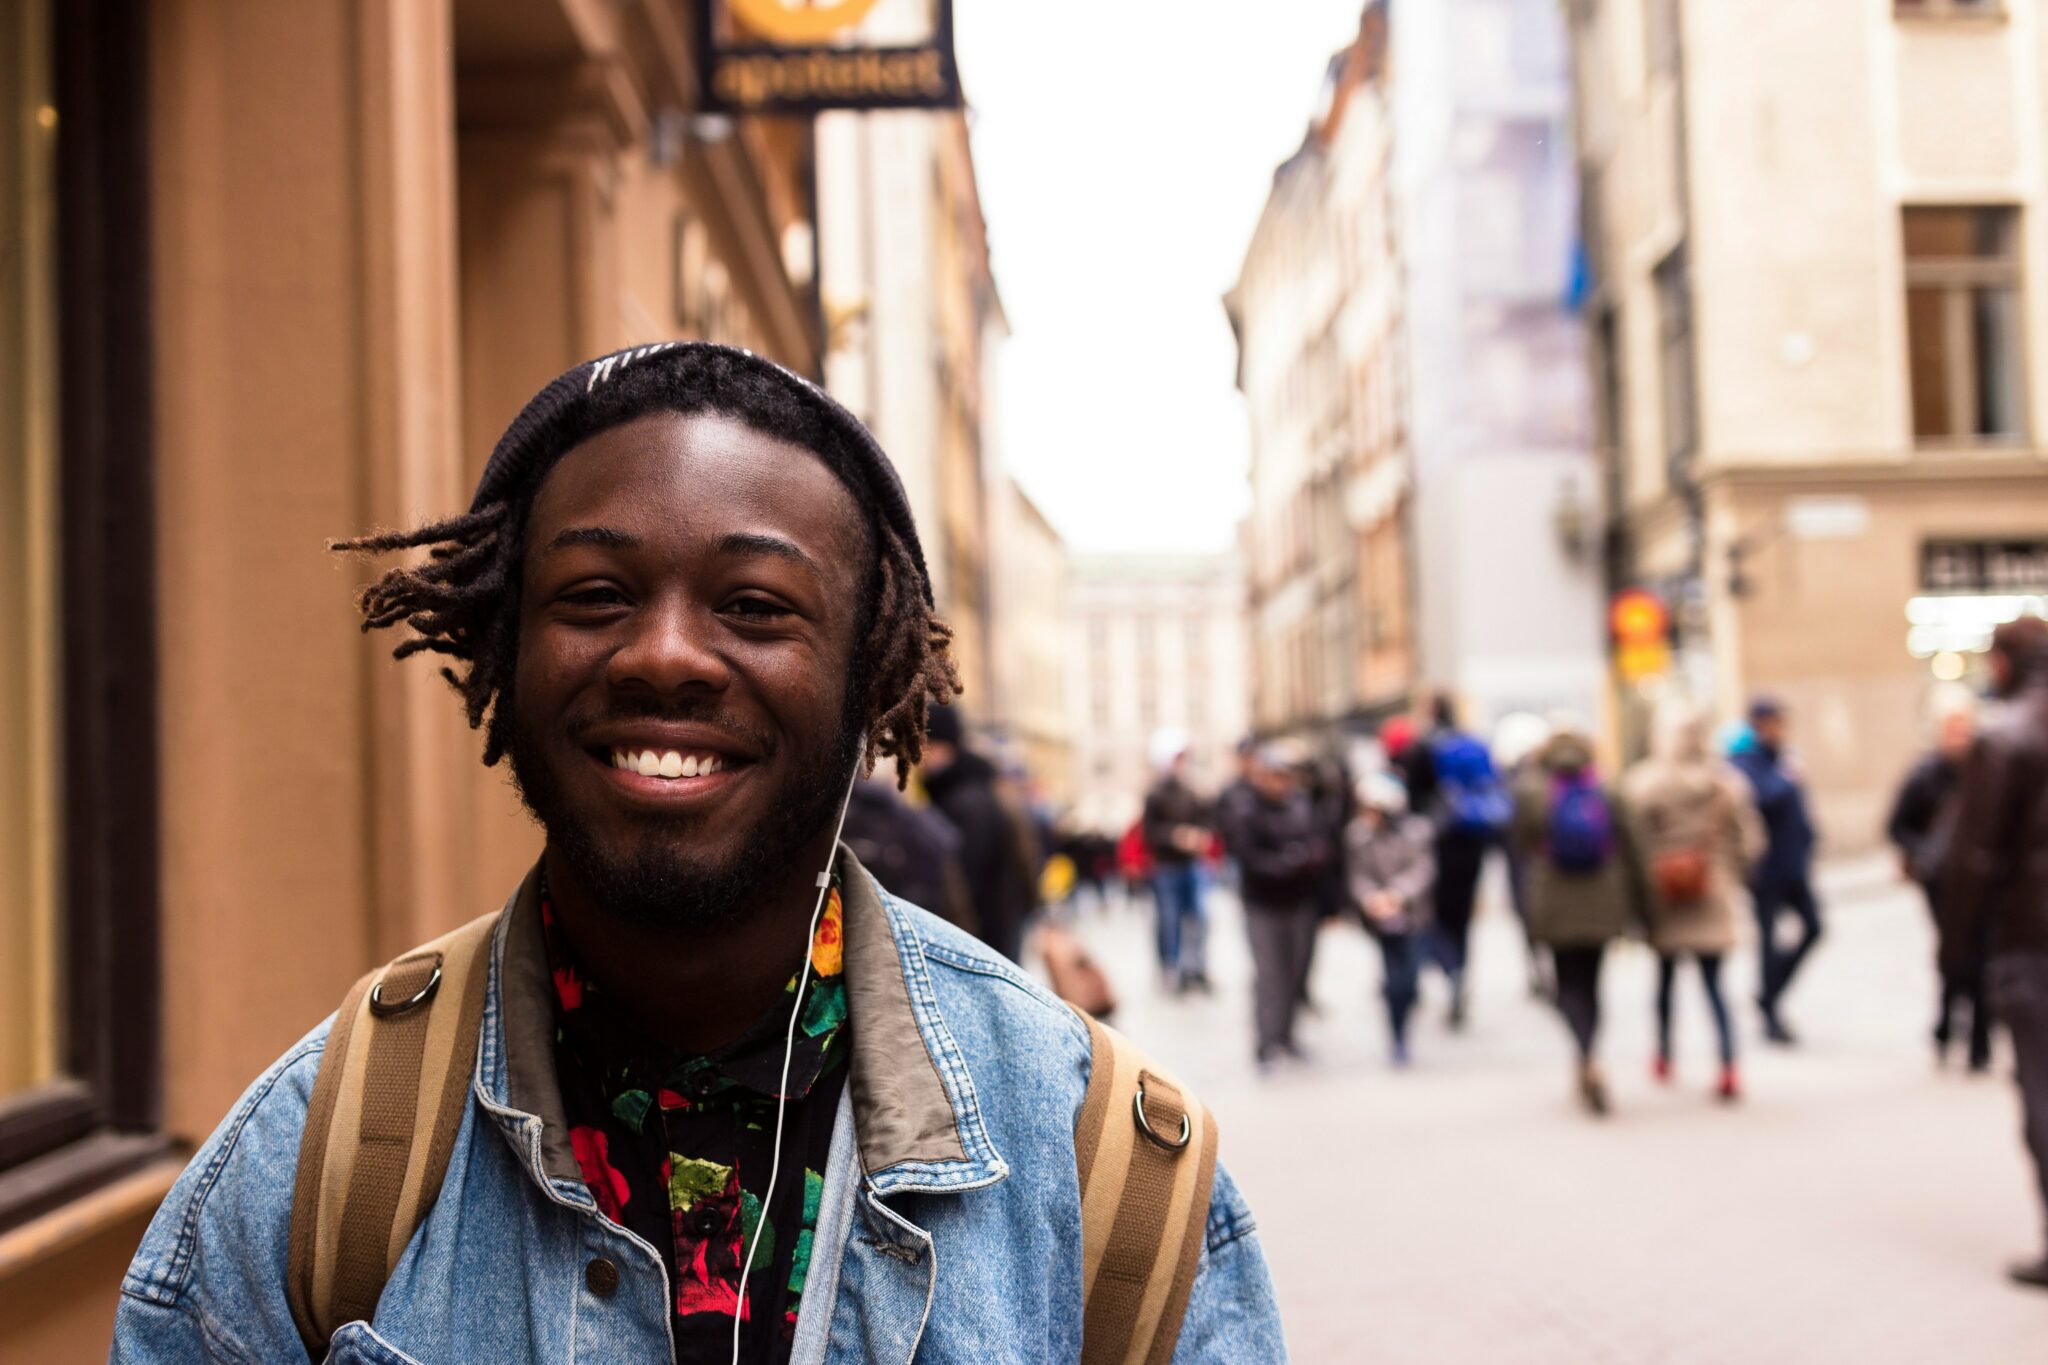 grinning young Black man wearing headphones